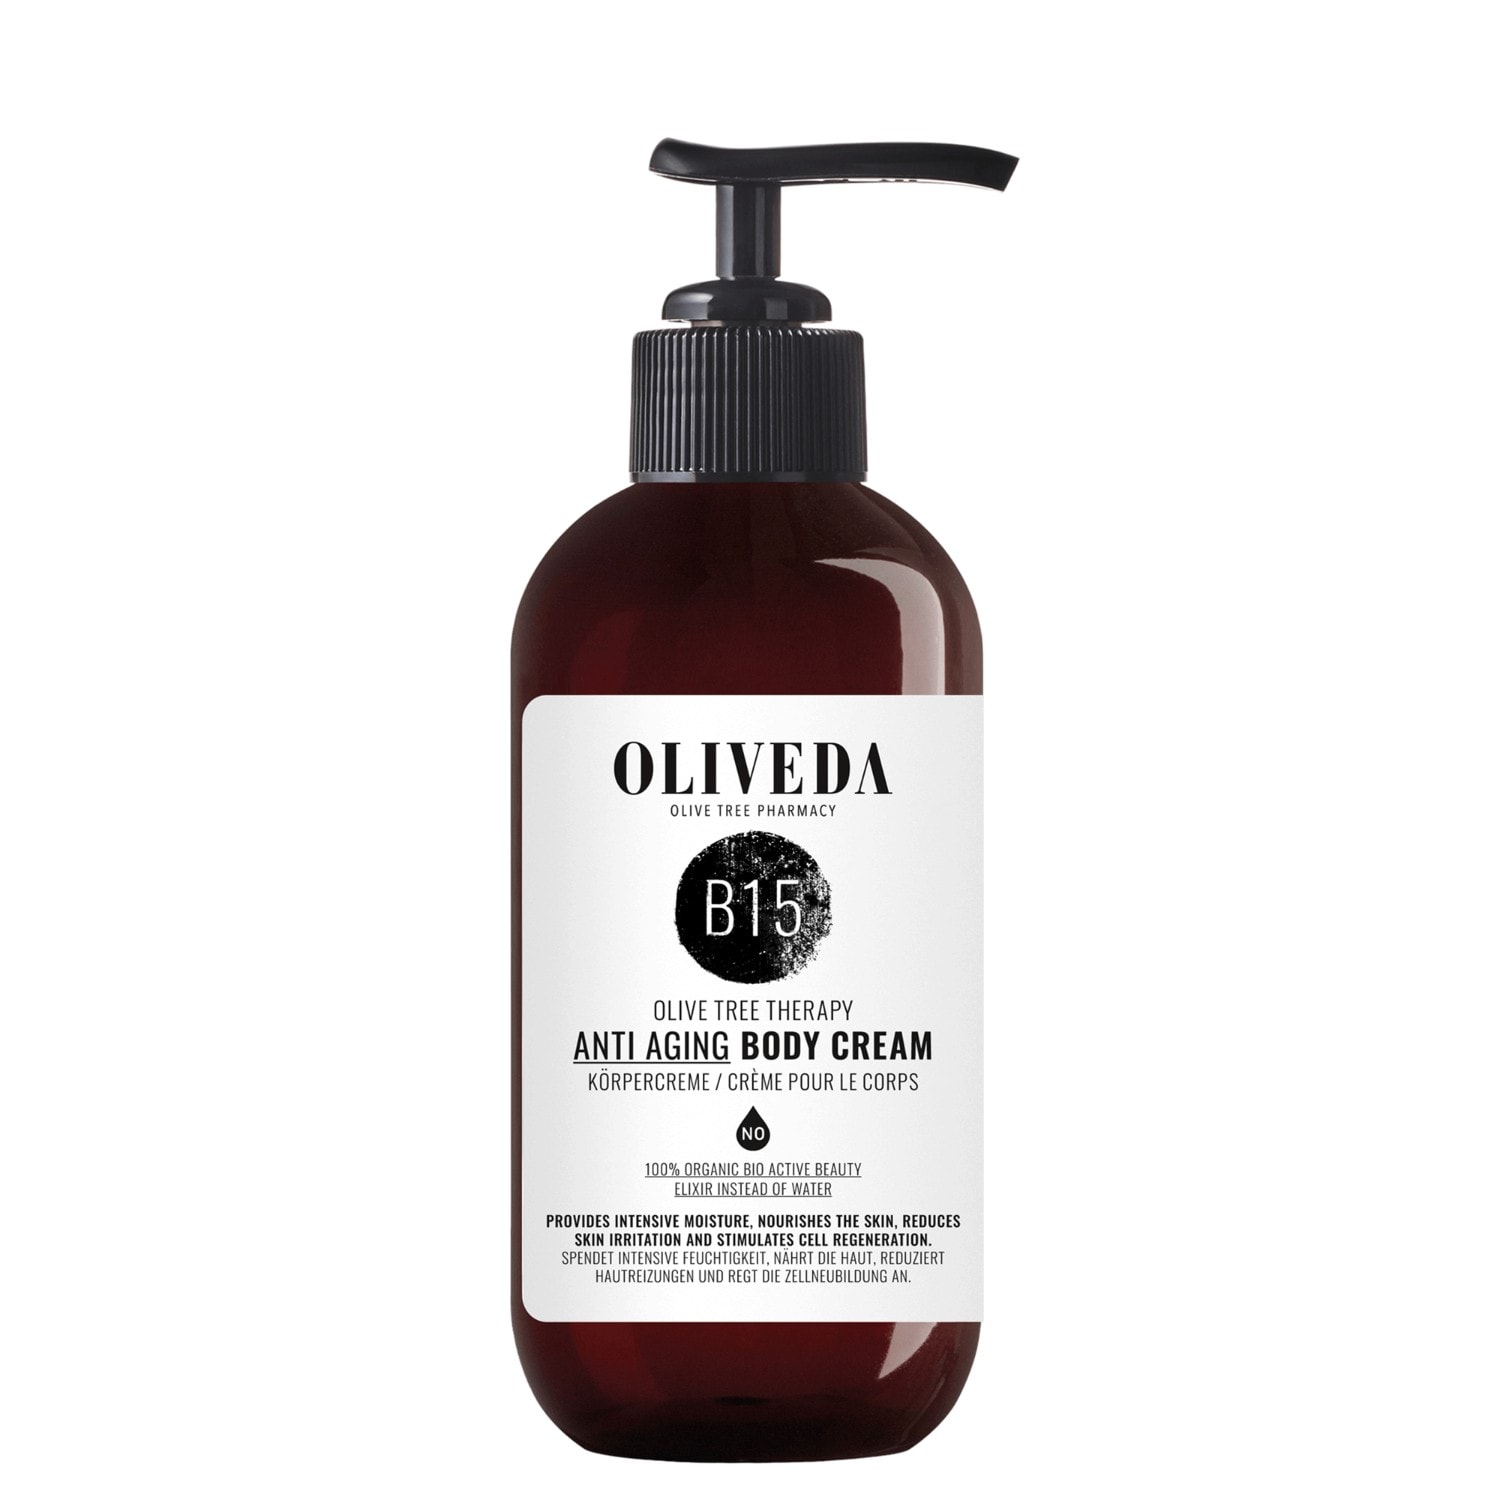 Oliveda Anti Aging Body Cream